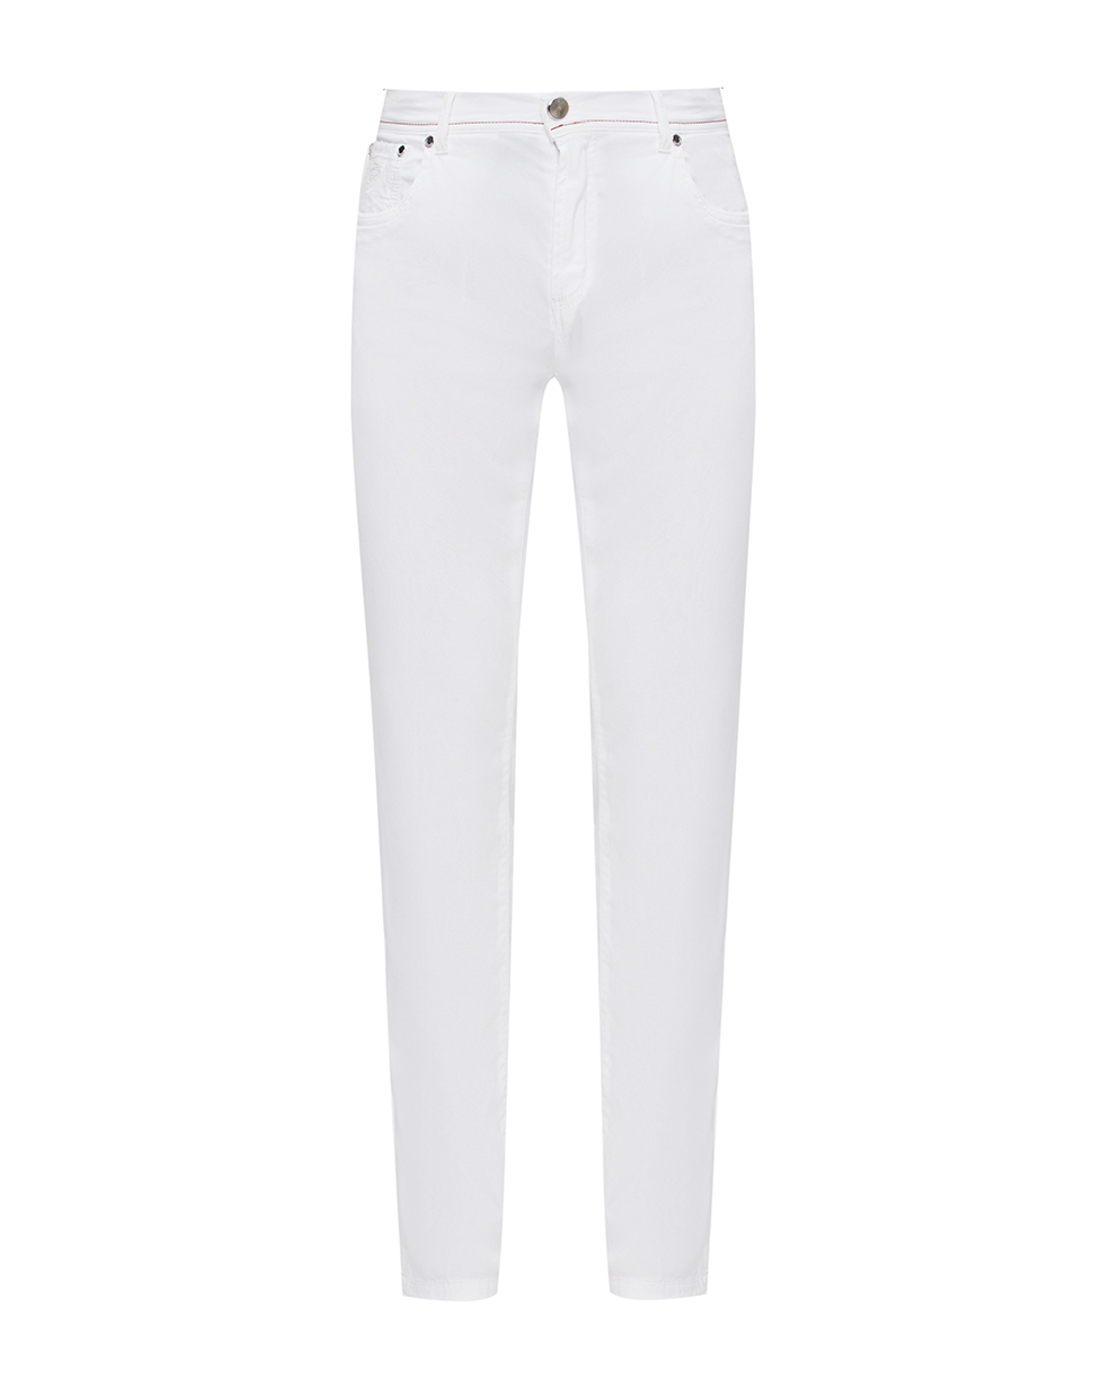 Мужские белые джинсы Richard J. Brown ST166.001-1